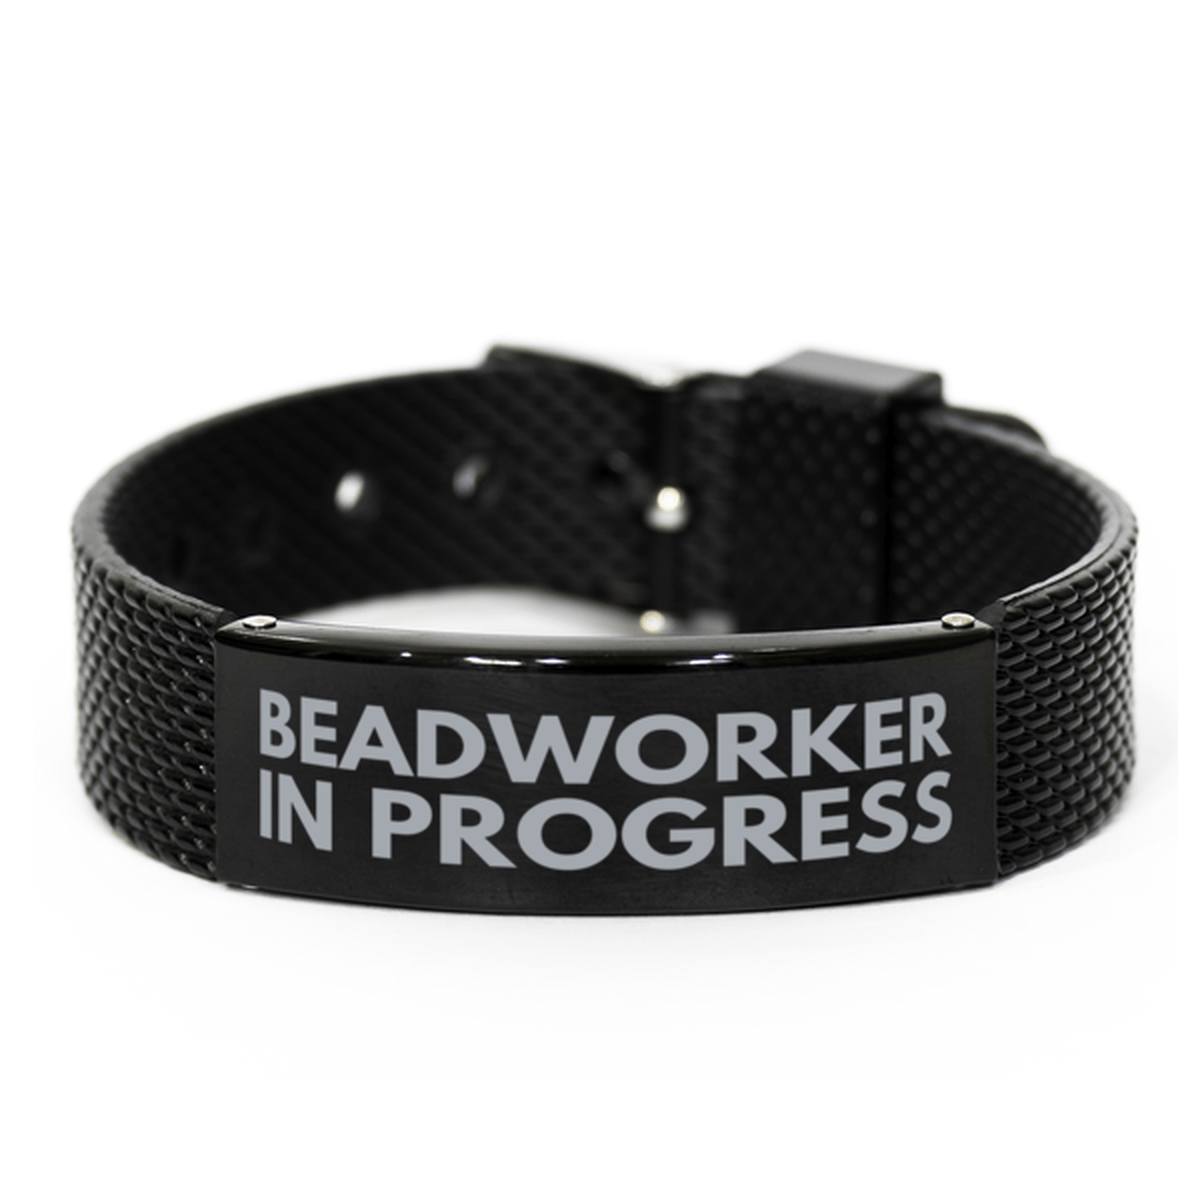 Inspirational Beadworker Black Shark Mesh Bracelet, Beadworker In Progress, Best Graduation Gifts for Students